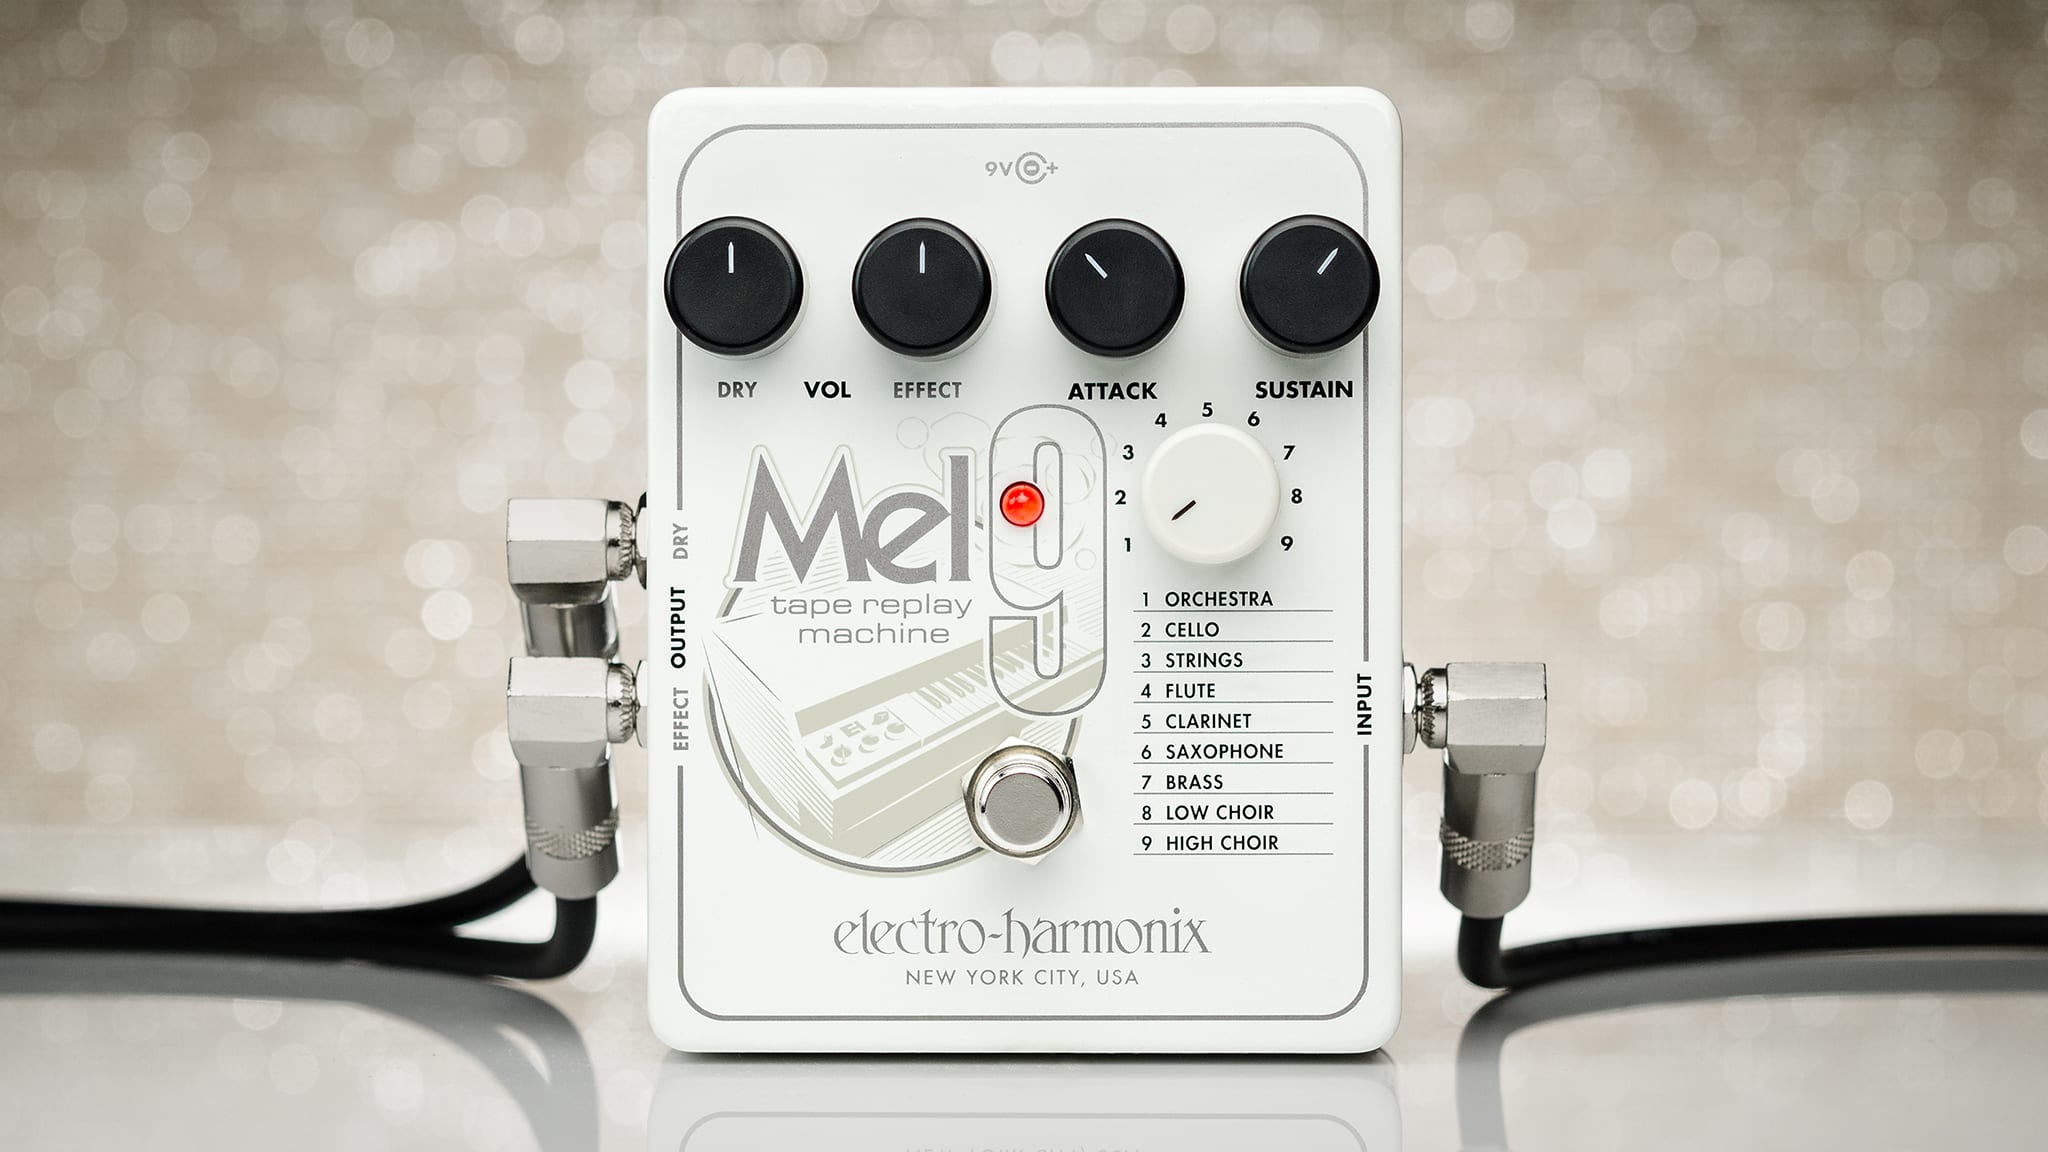 MEL9 | Tape Replay Machine - Electro-Harmonix